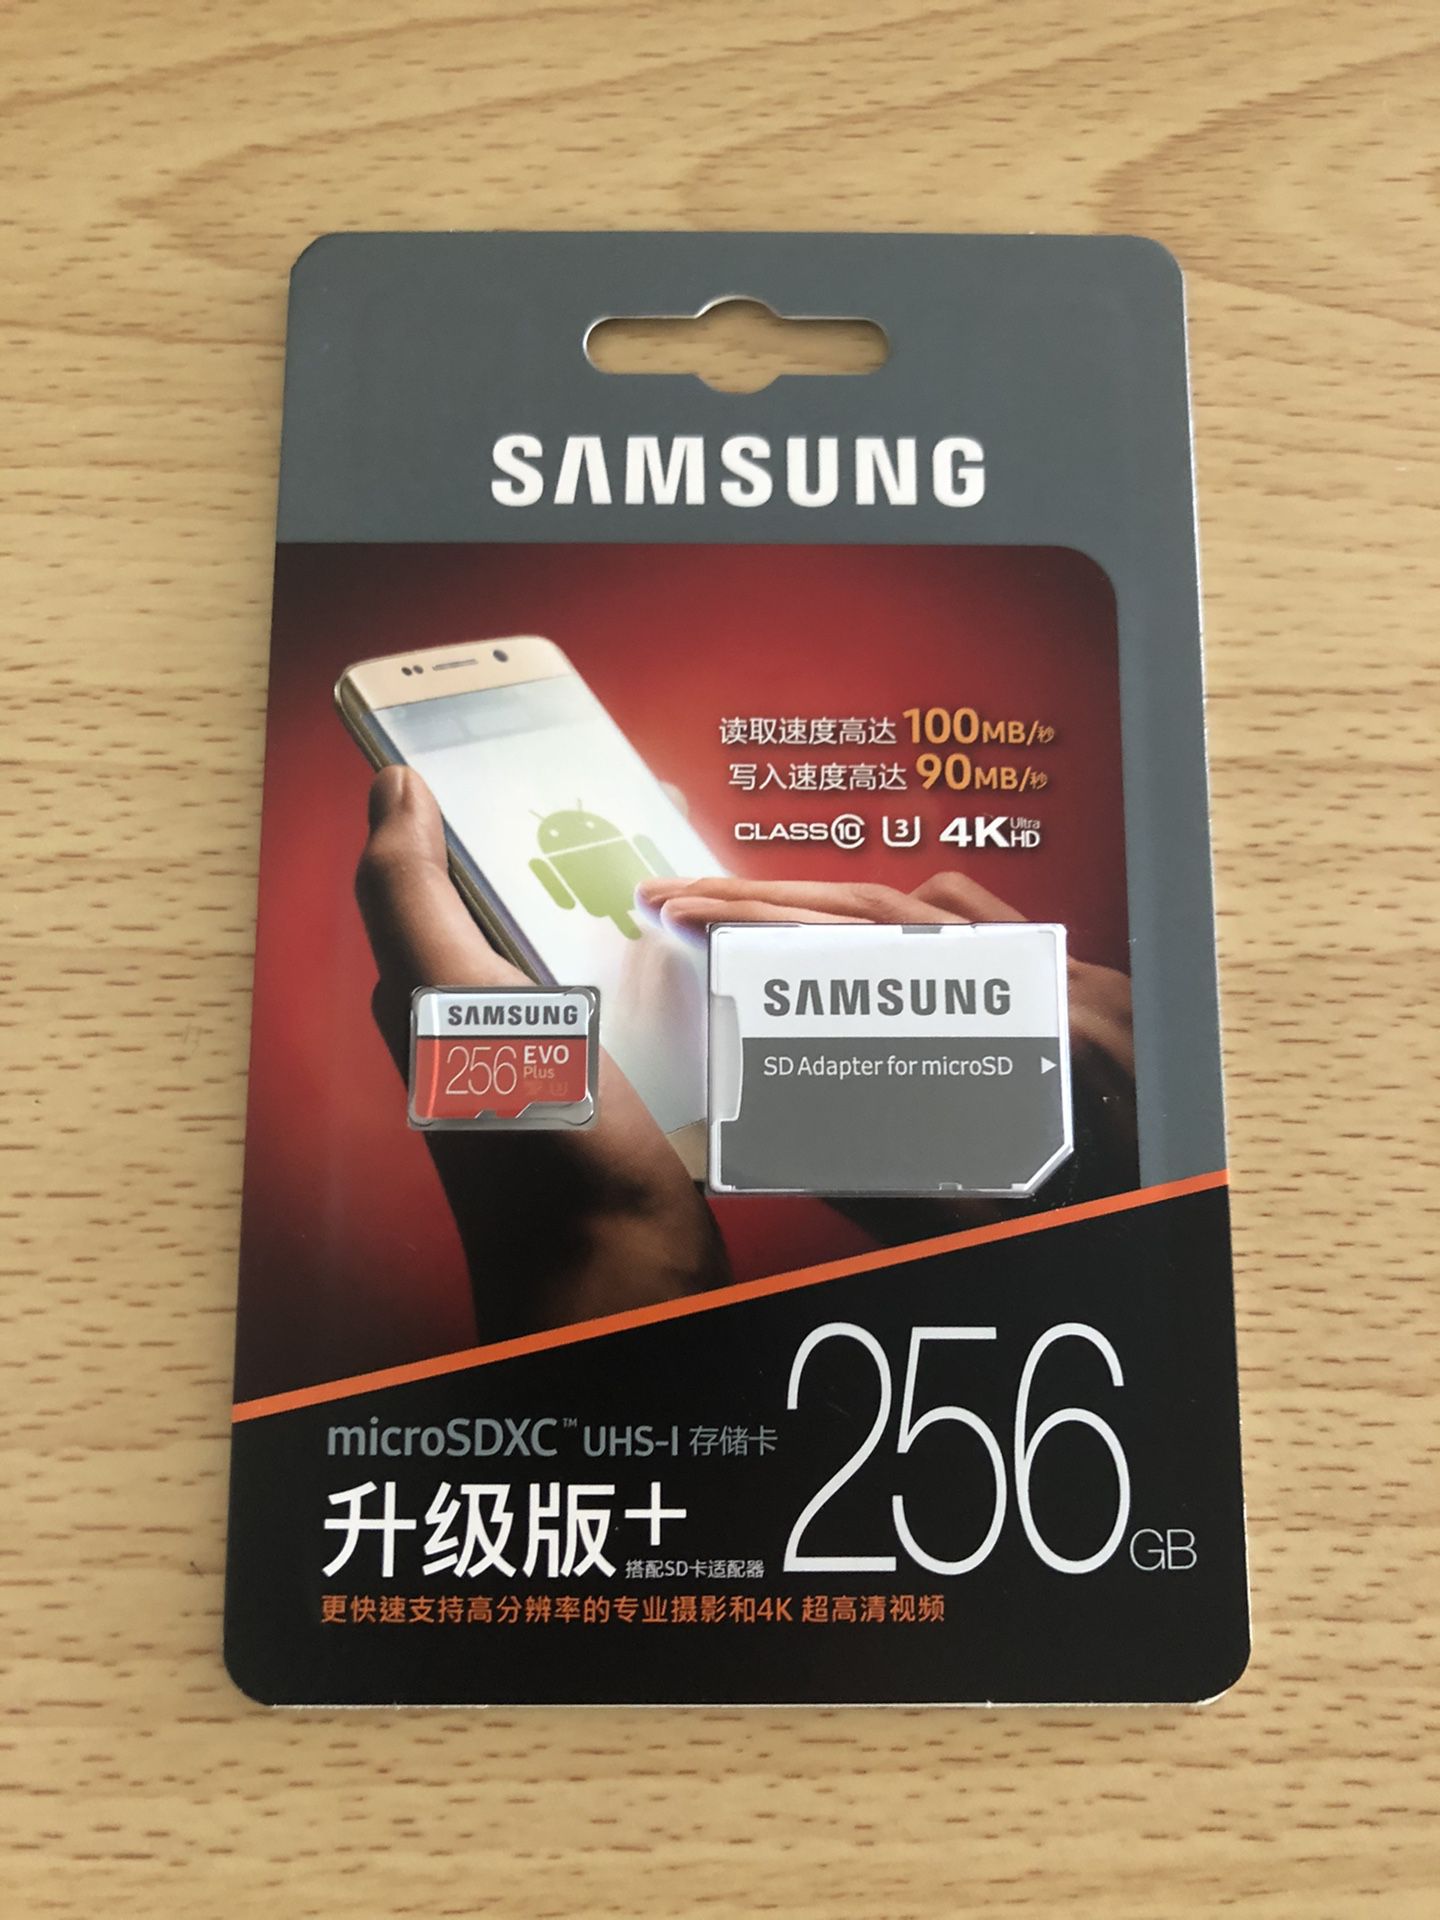 Samsung Evo Plus 256 Micro SD Card with Adapter